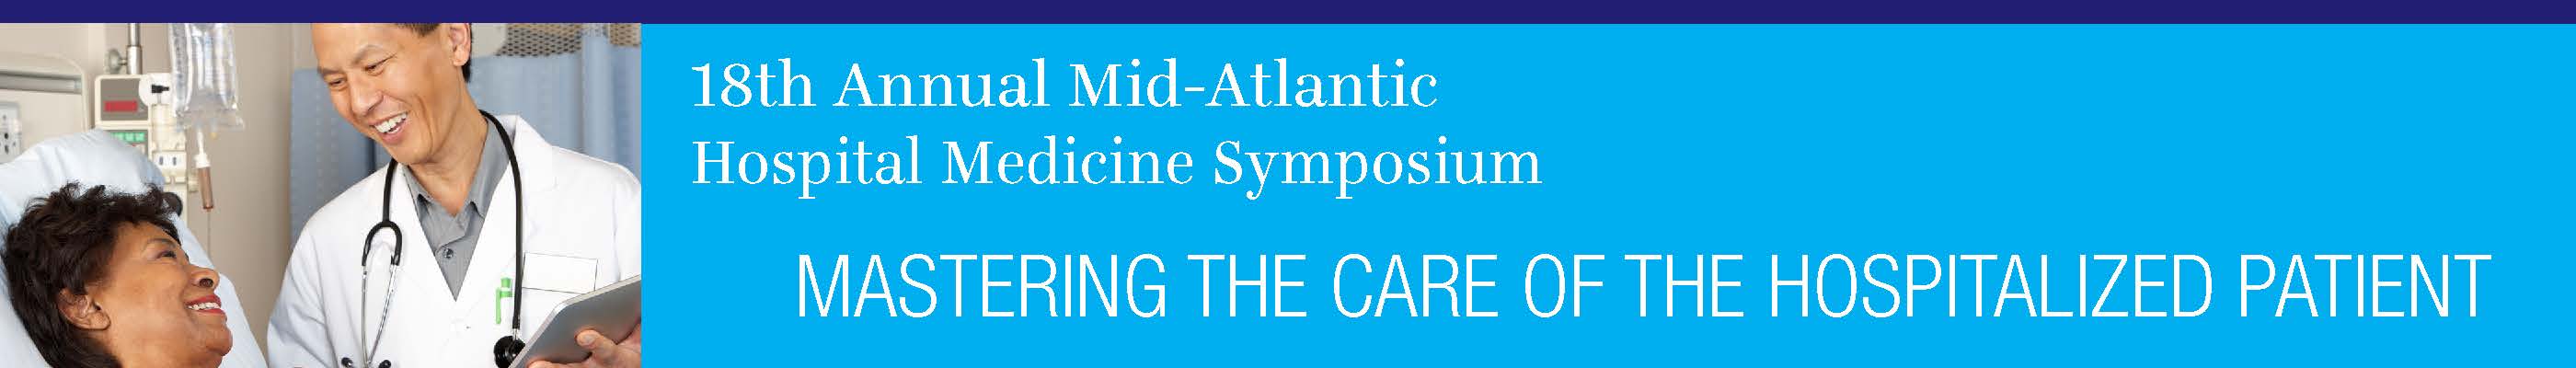 18th Annual Mid-Atlantic Hospital Medicine Symposium Banner